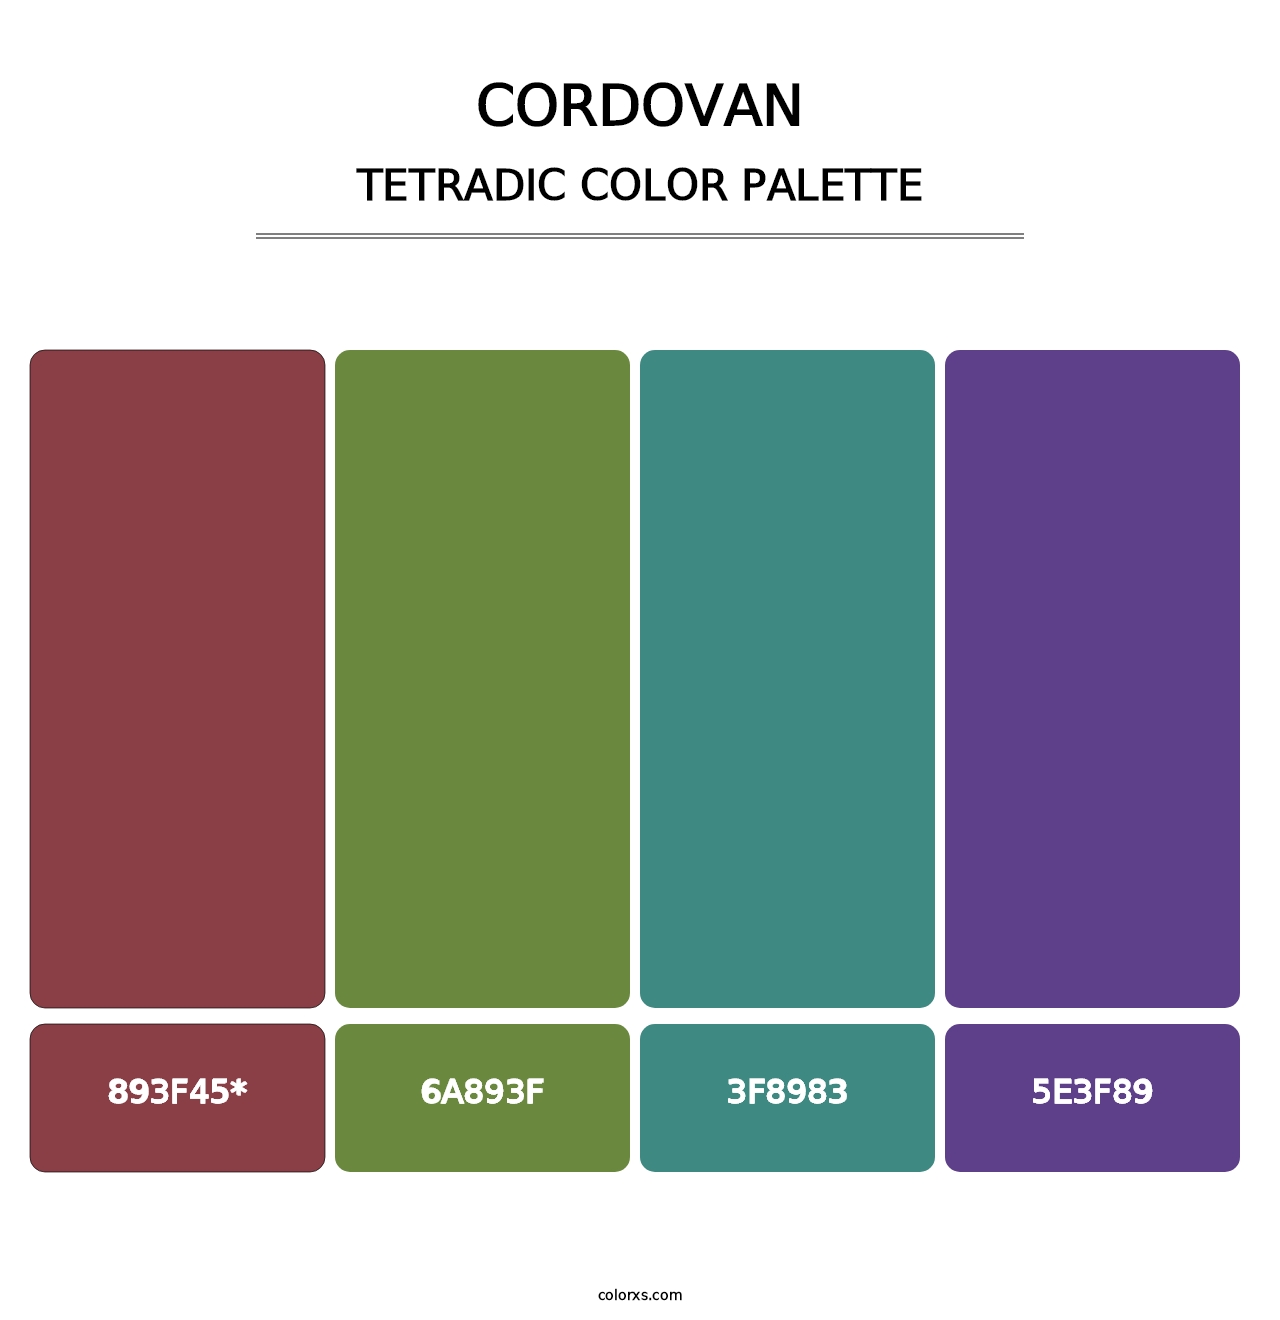 Cordovan - Tetradic Color Palette